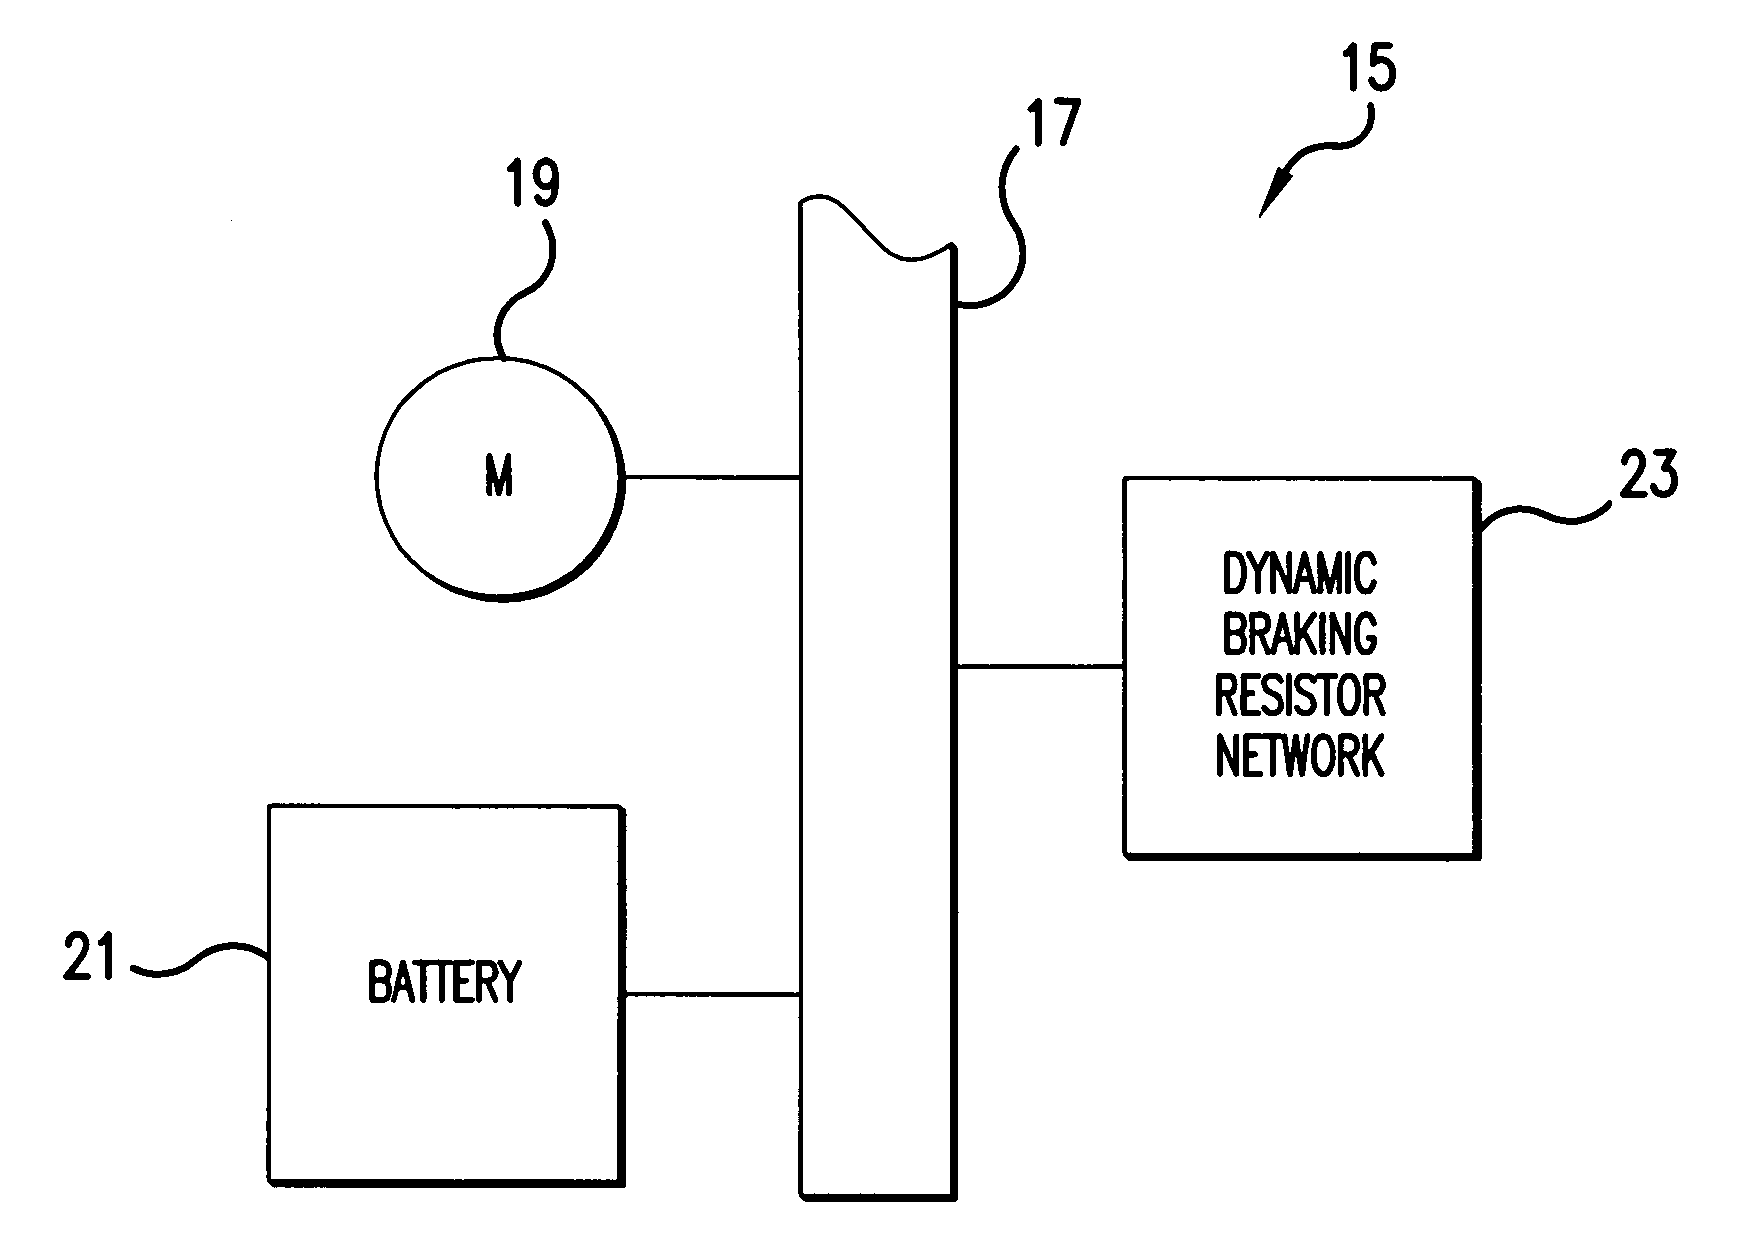 Multi-stage dynamic braking resistor network